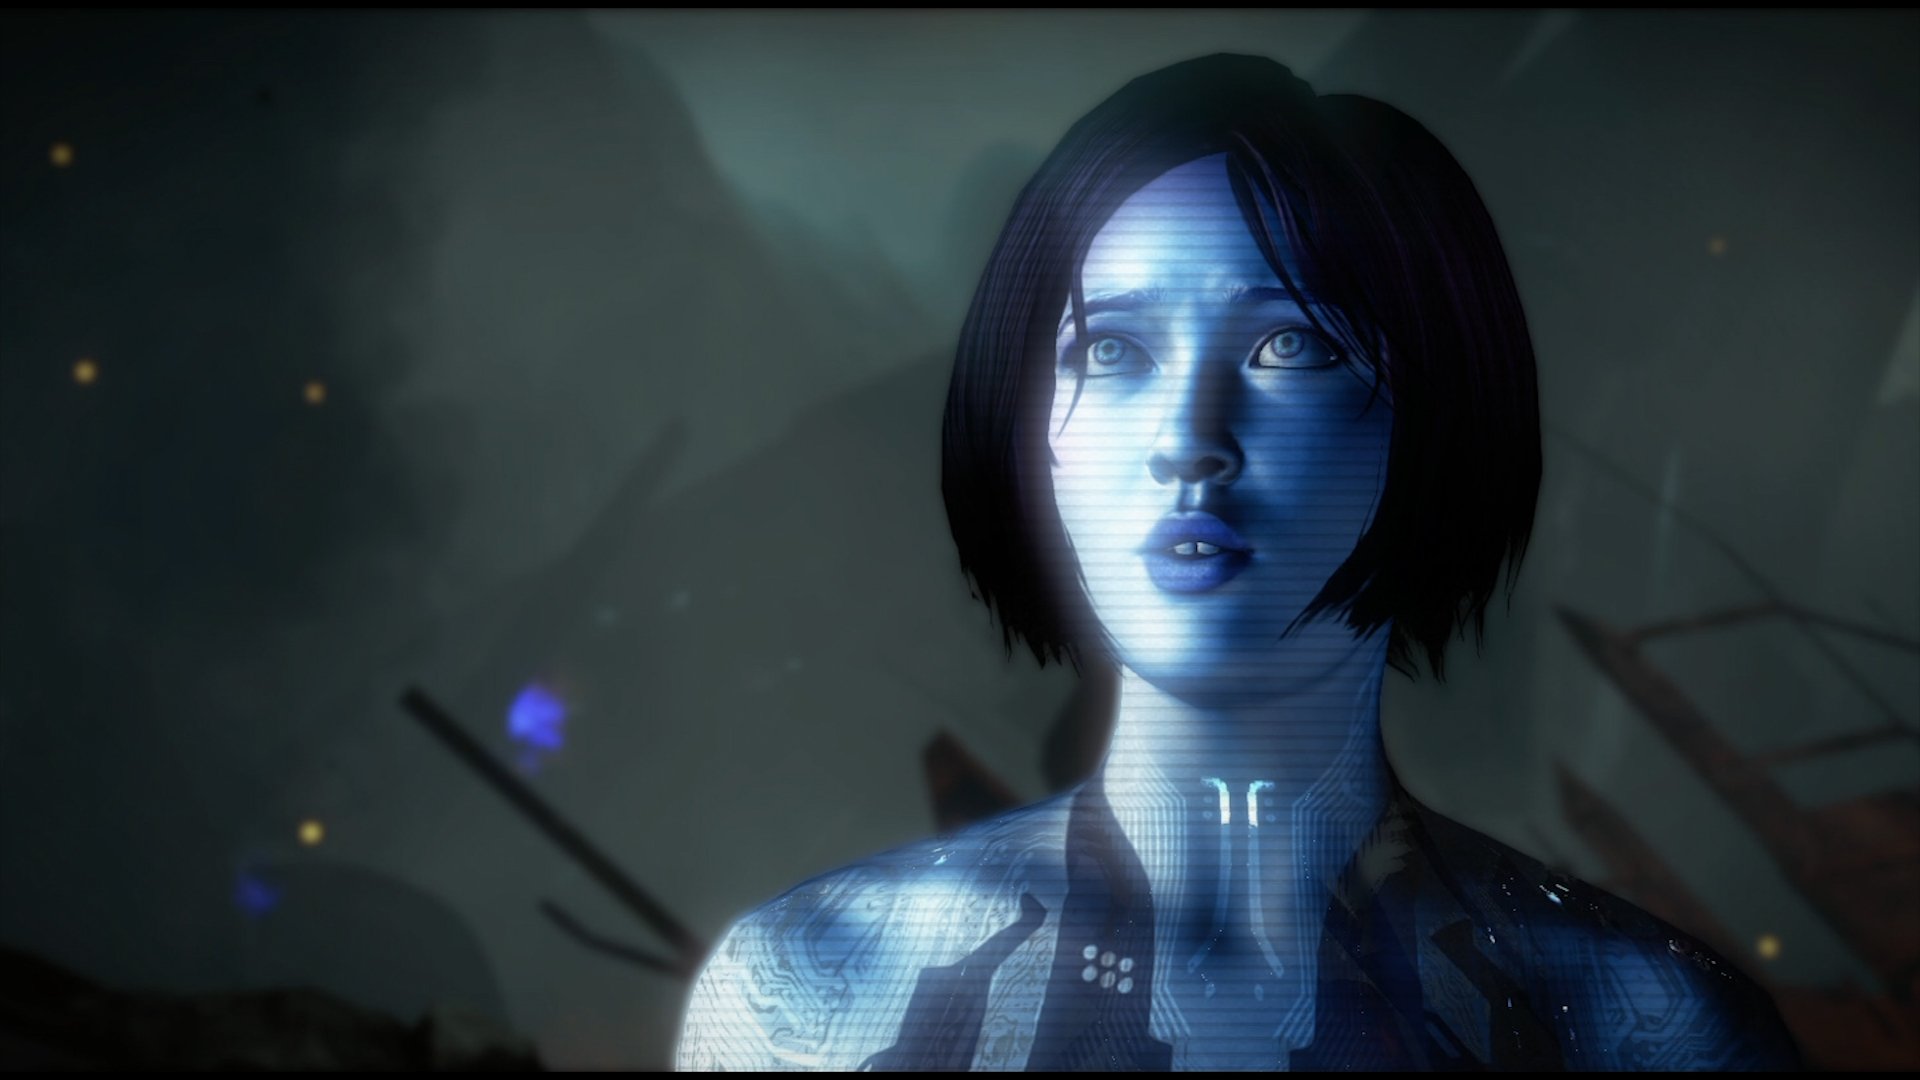 Halo-5-Guardians-Cortana-and-Master-Chief-Actors-0.jpg